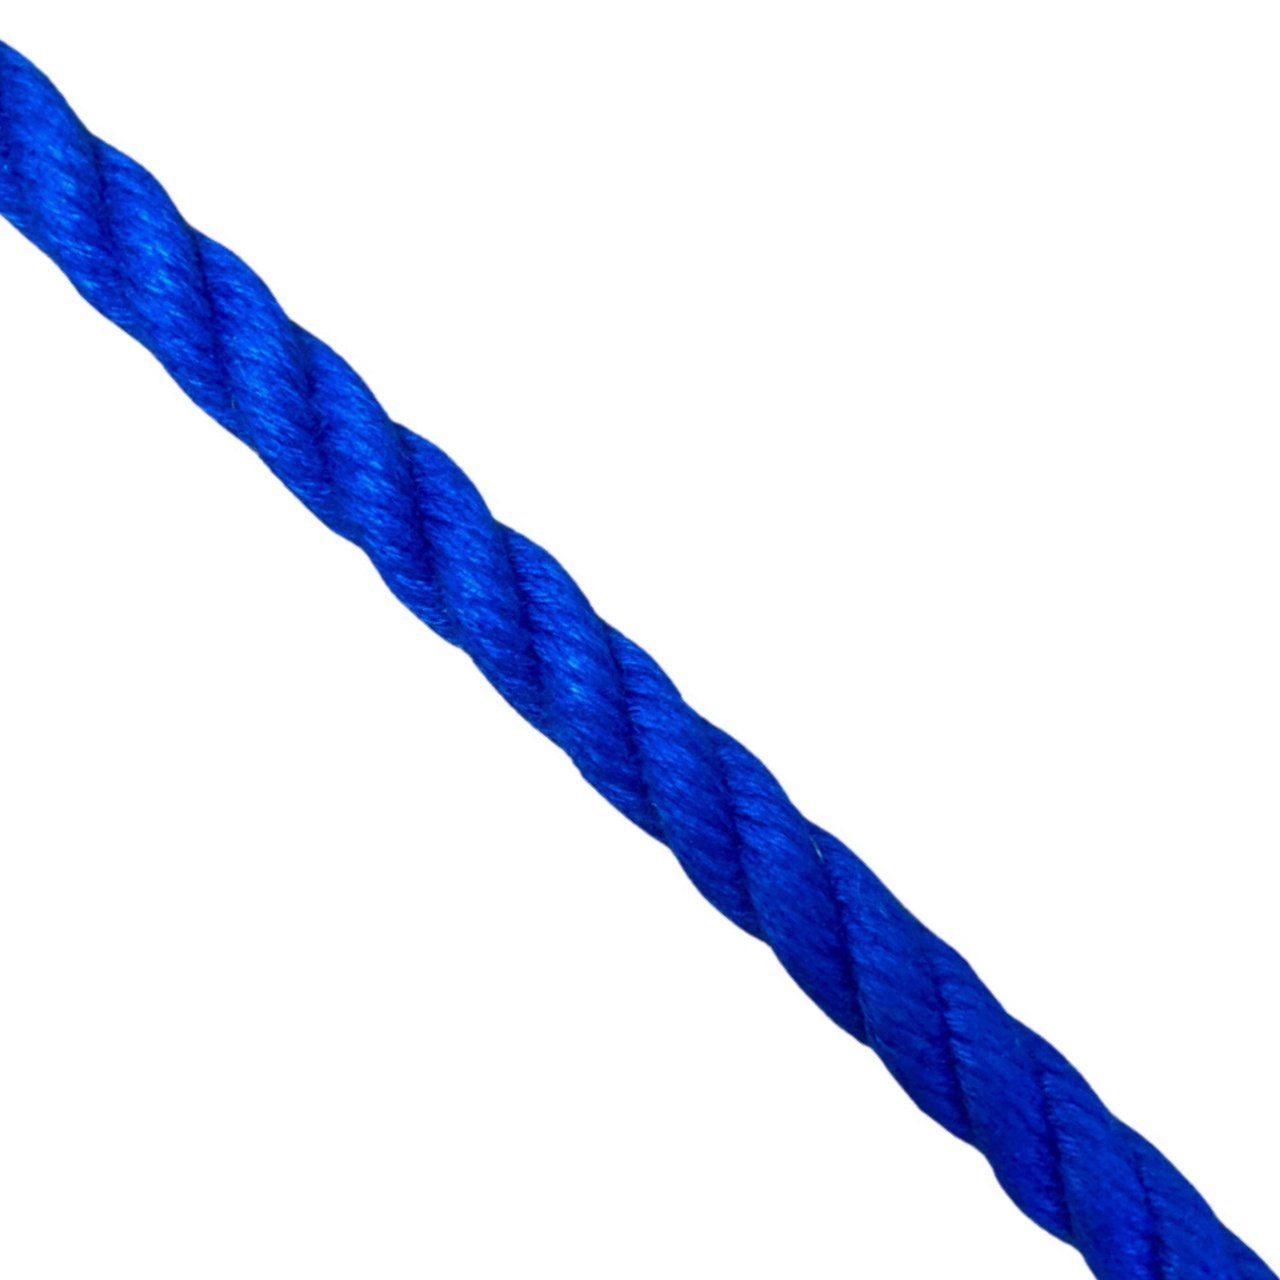 Royal blue POSH Rope Bulk by the Foot.